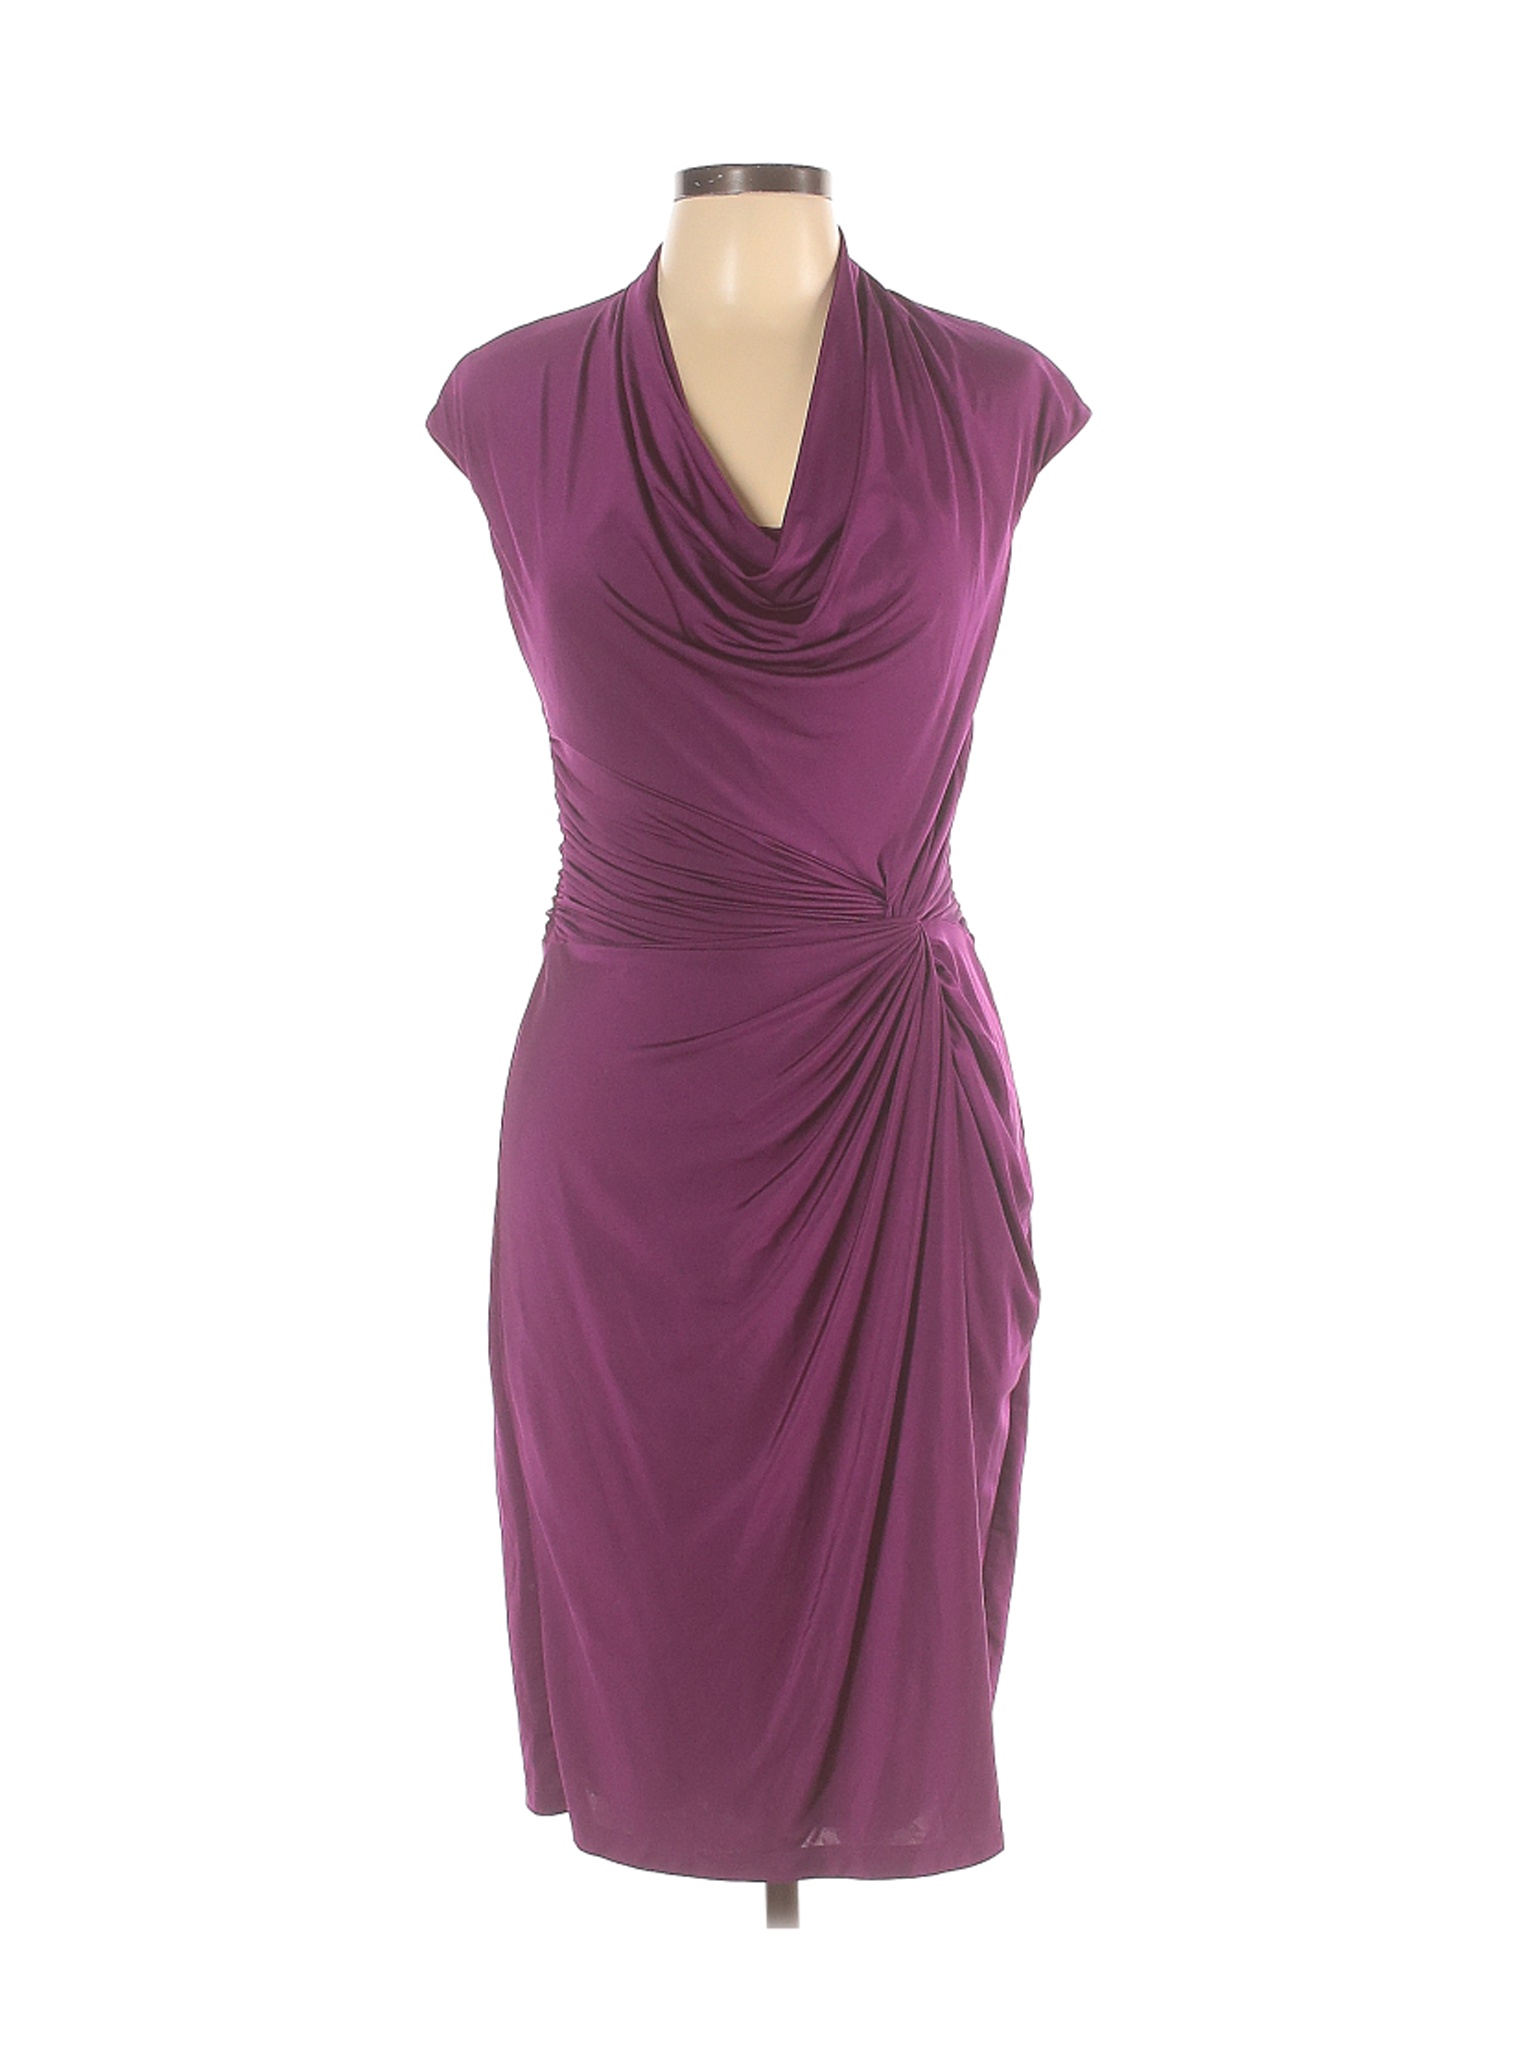 Maggy London Women Purple Cocktail Dress 10 | eBay